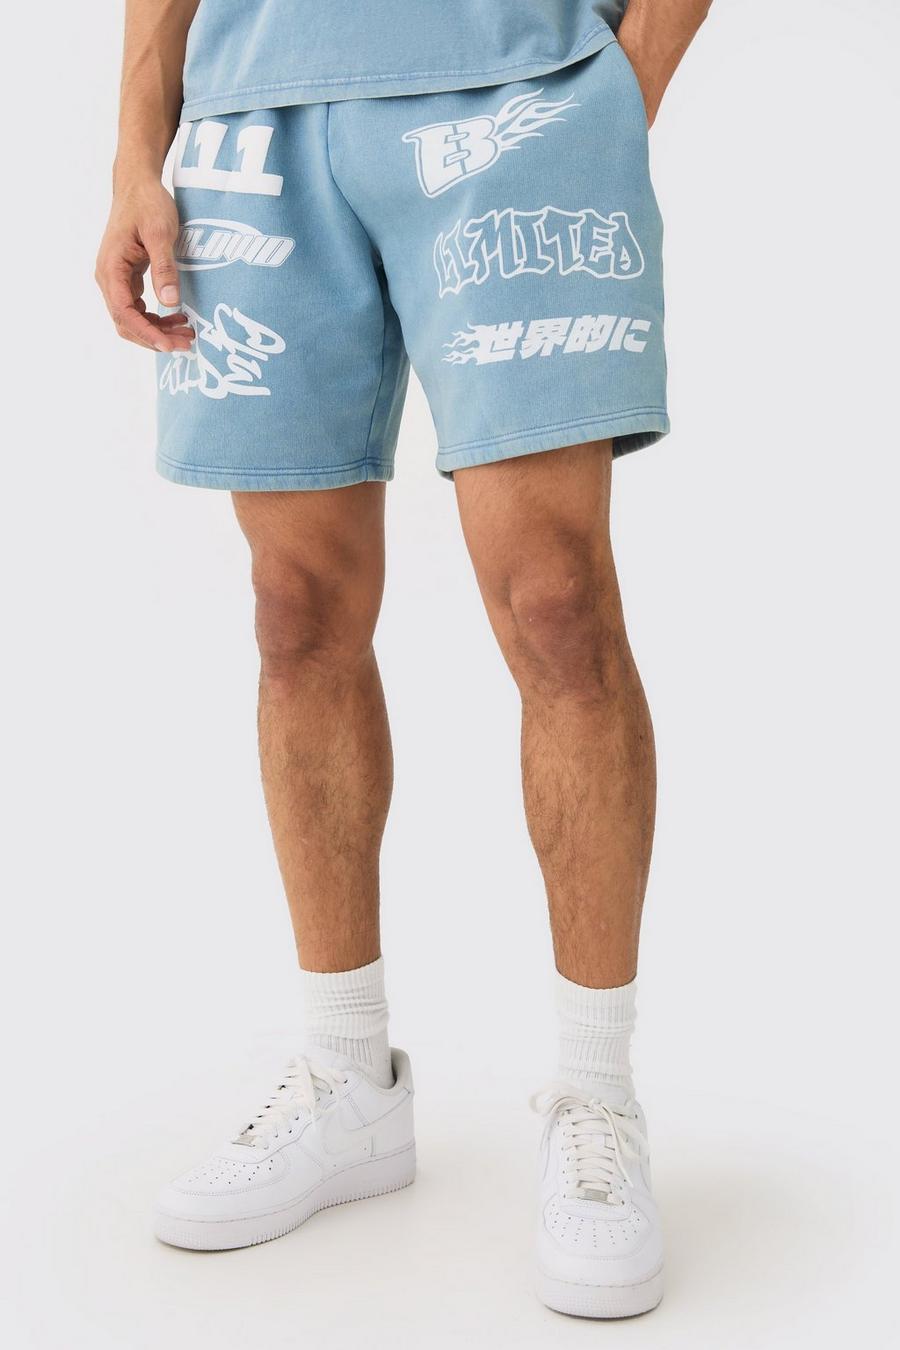 Lockere Shorts mit Print, Slate blue